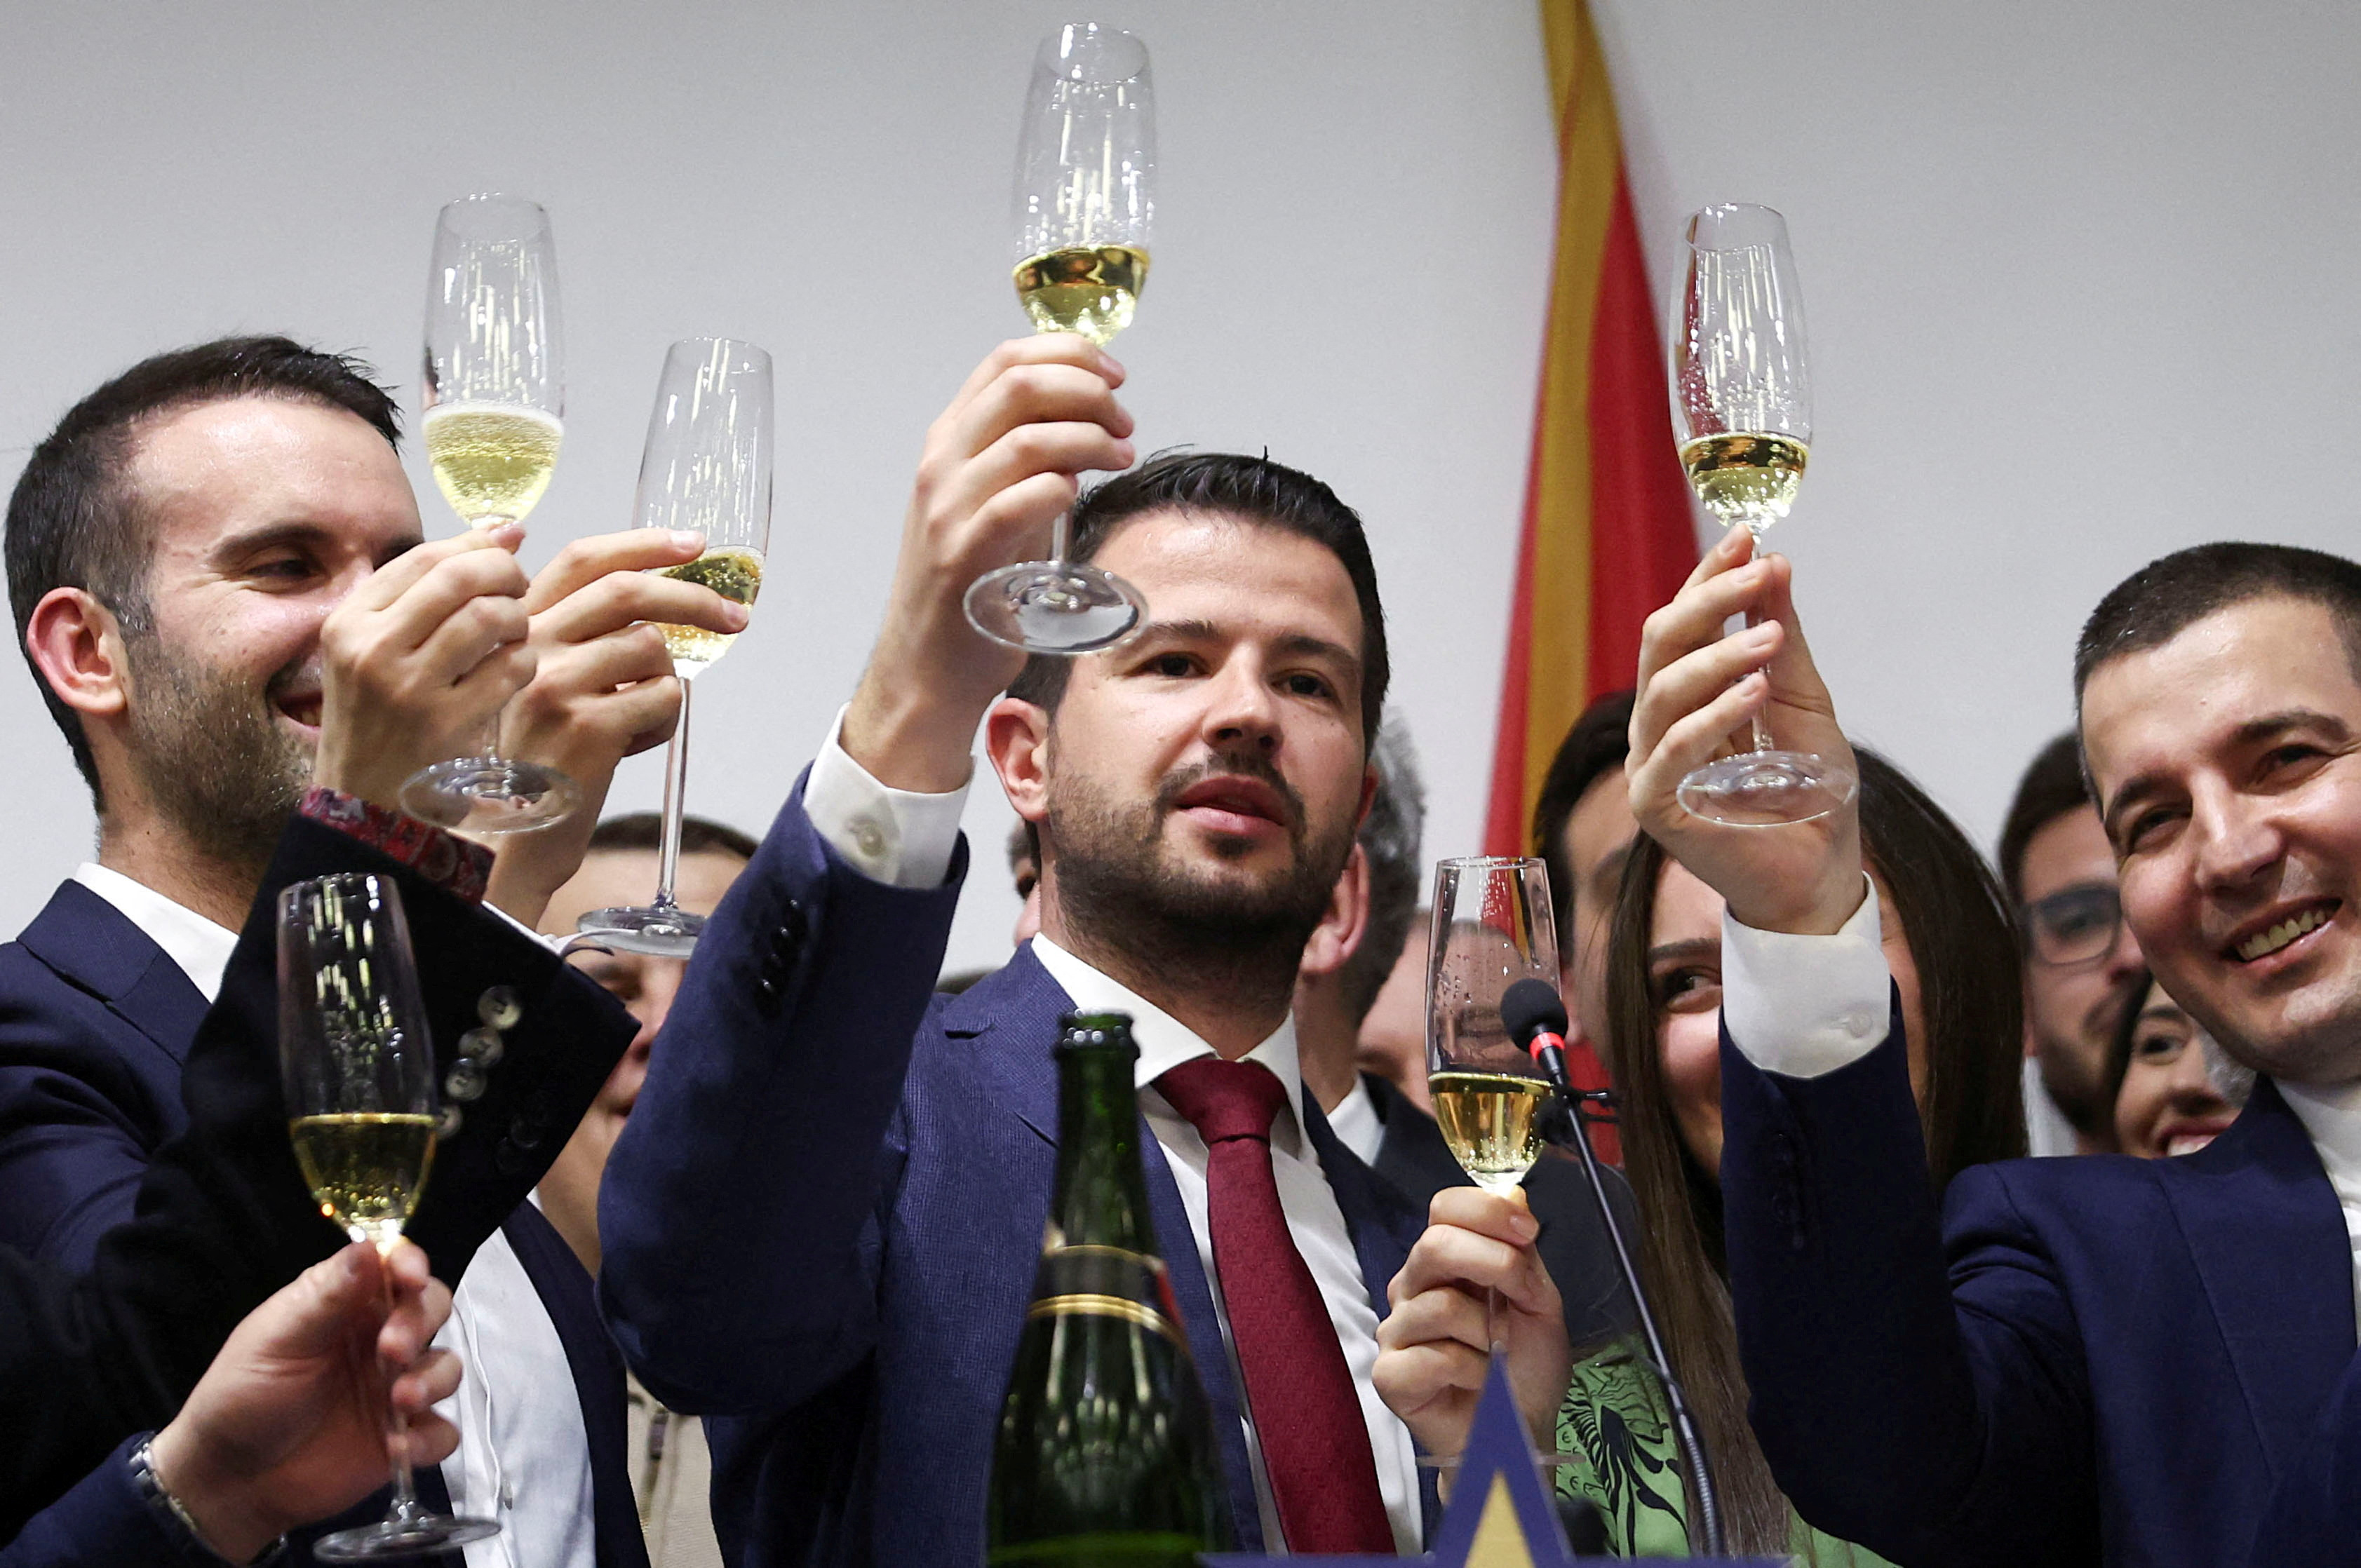 Jakov Milatovic, Montenegro's president-elect, celebrates the first presidential election results. /Marko Djurica/Reuters